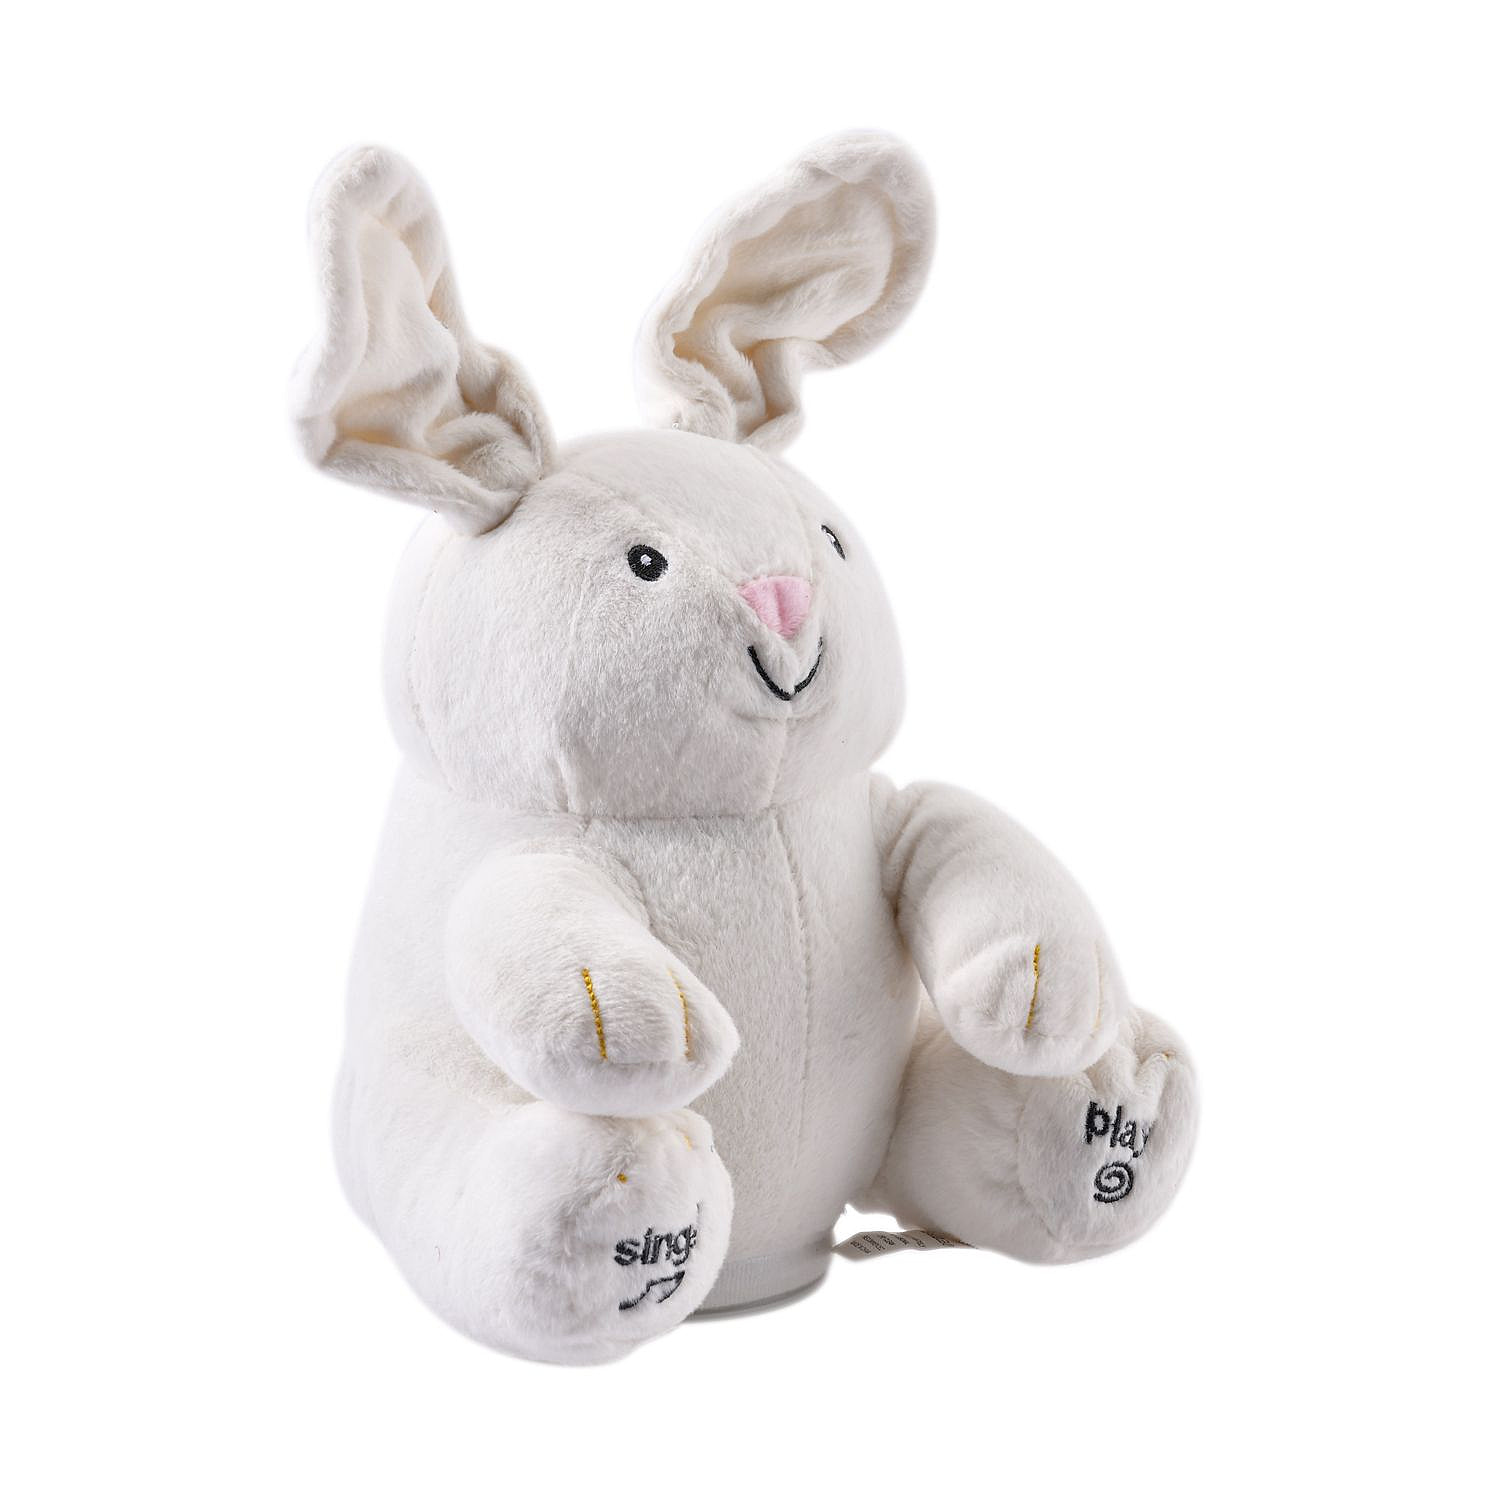 Peekaboo - Interactive Rabbit Musical Stuffed Toy with Floppy